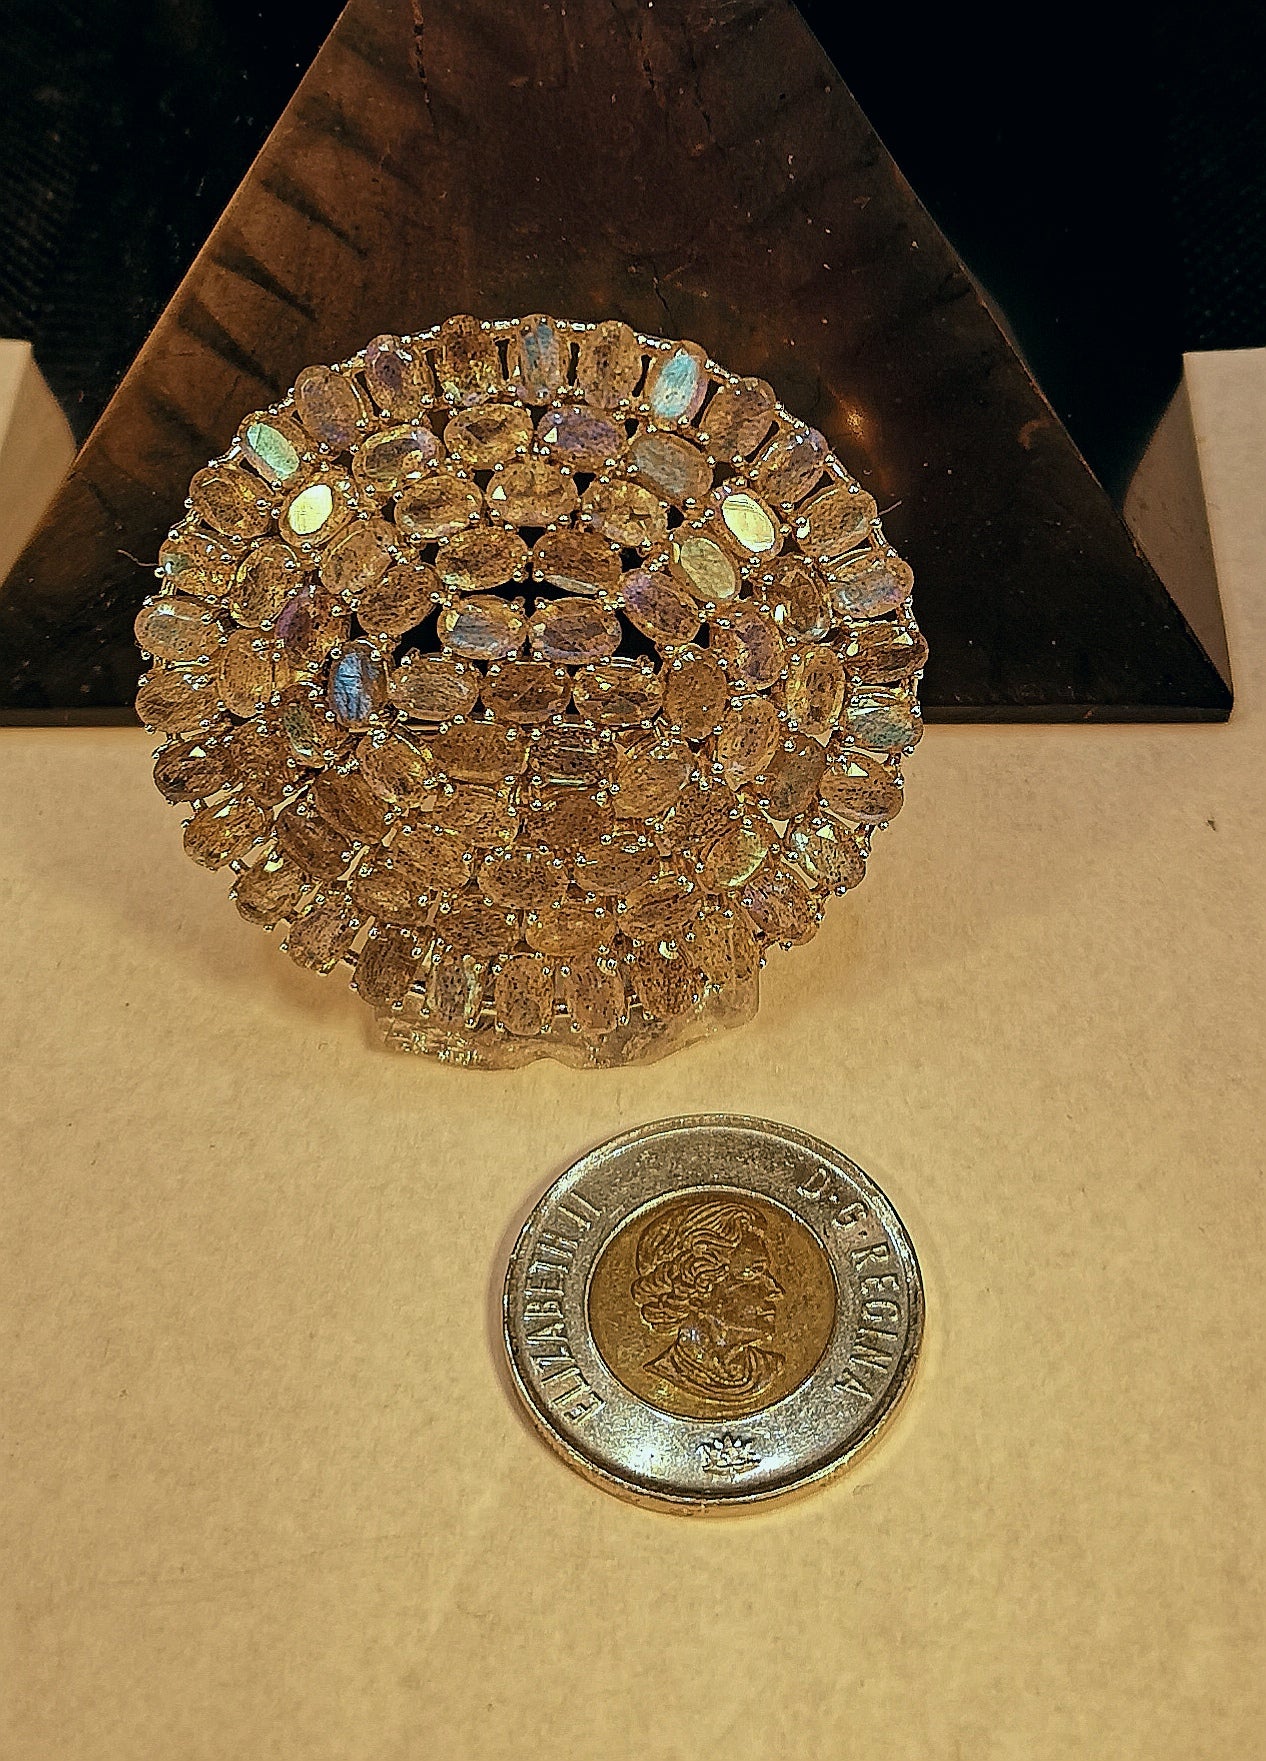 Multi stone labradorite pendant/brooch in sterling silver